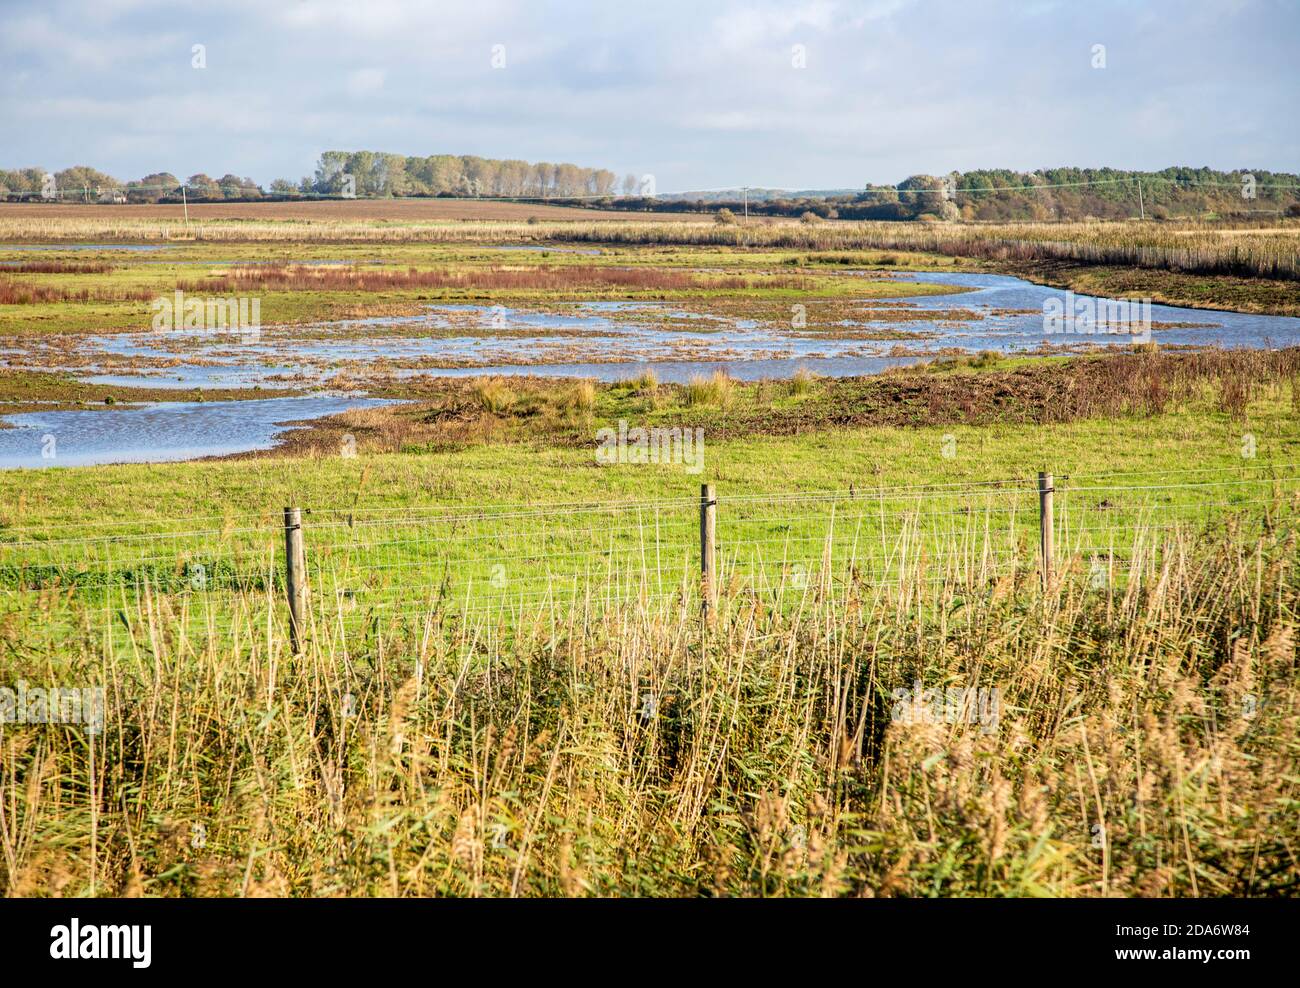 RSPB Vogelreservat Hollesley Marshes, Suffolk, England, UK Feuchtgebiet Sumpflandschaft Lebensraum Stockfoto